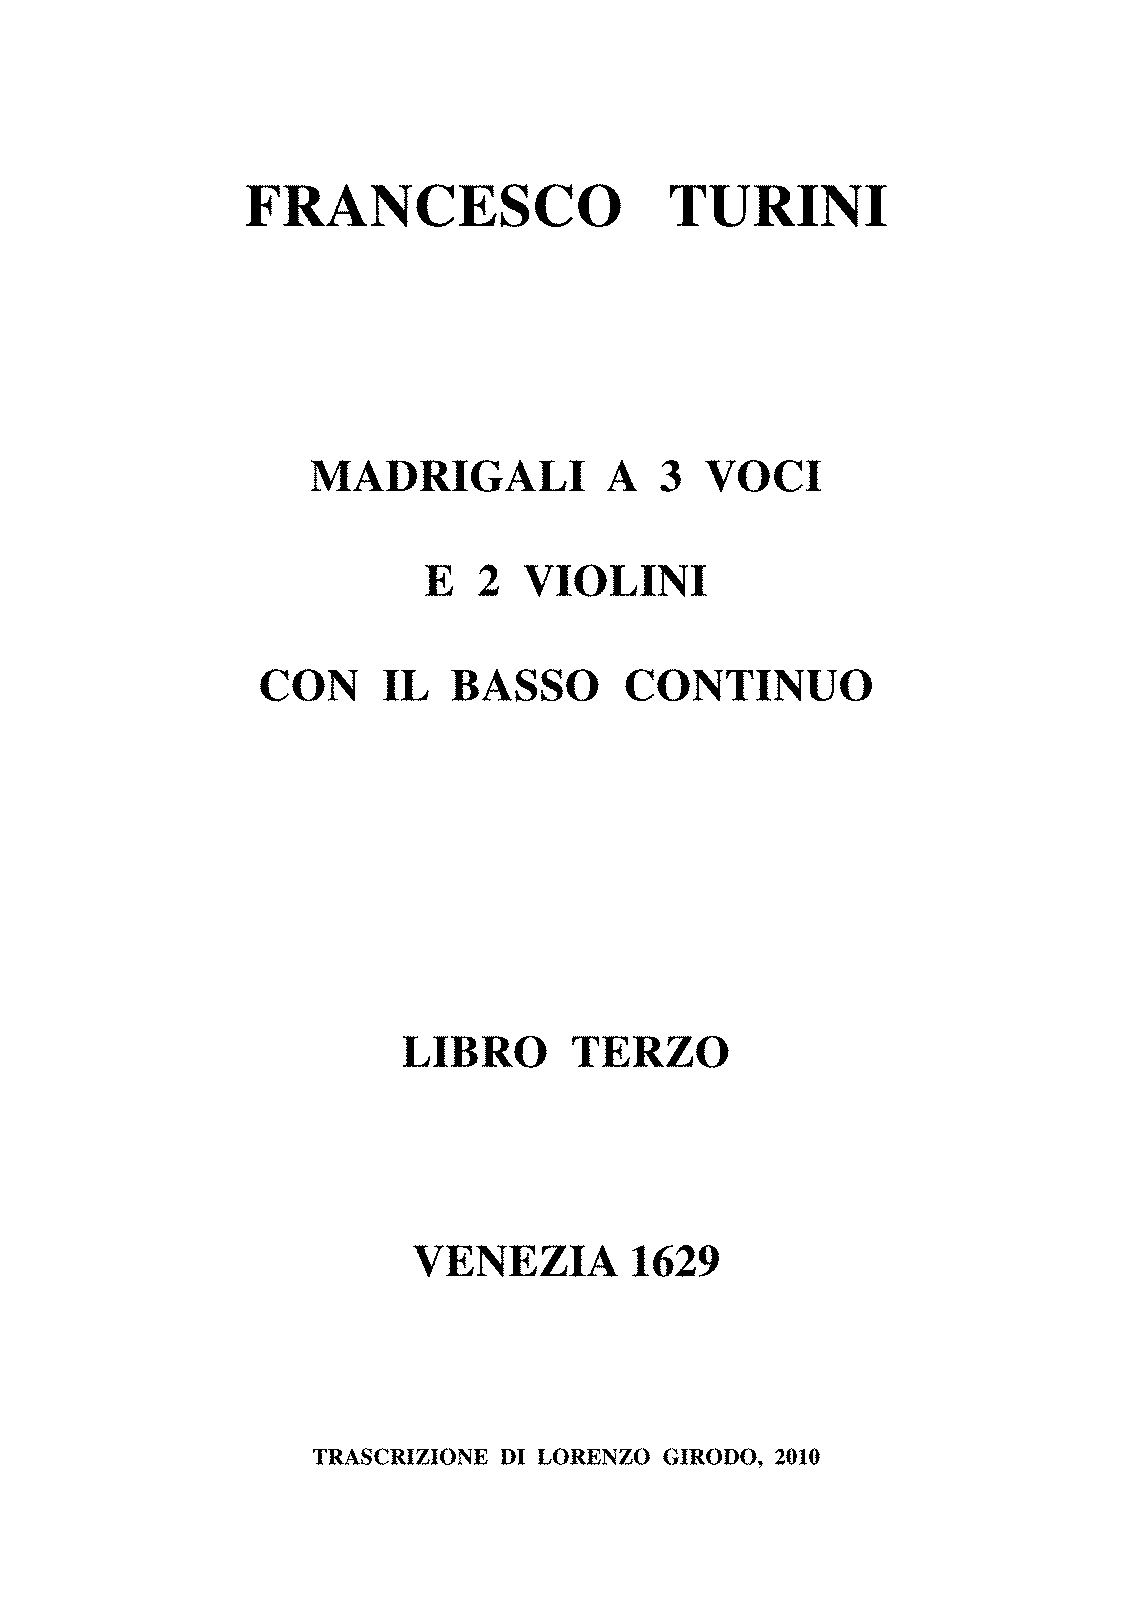 Madrigali, Libro 3 (Turini, Francesco) - IMSLP